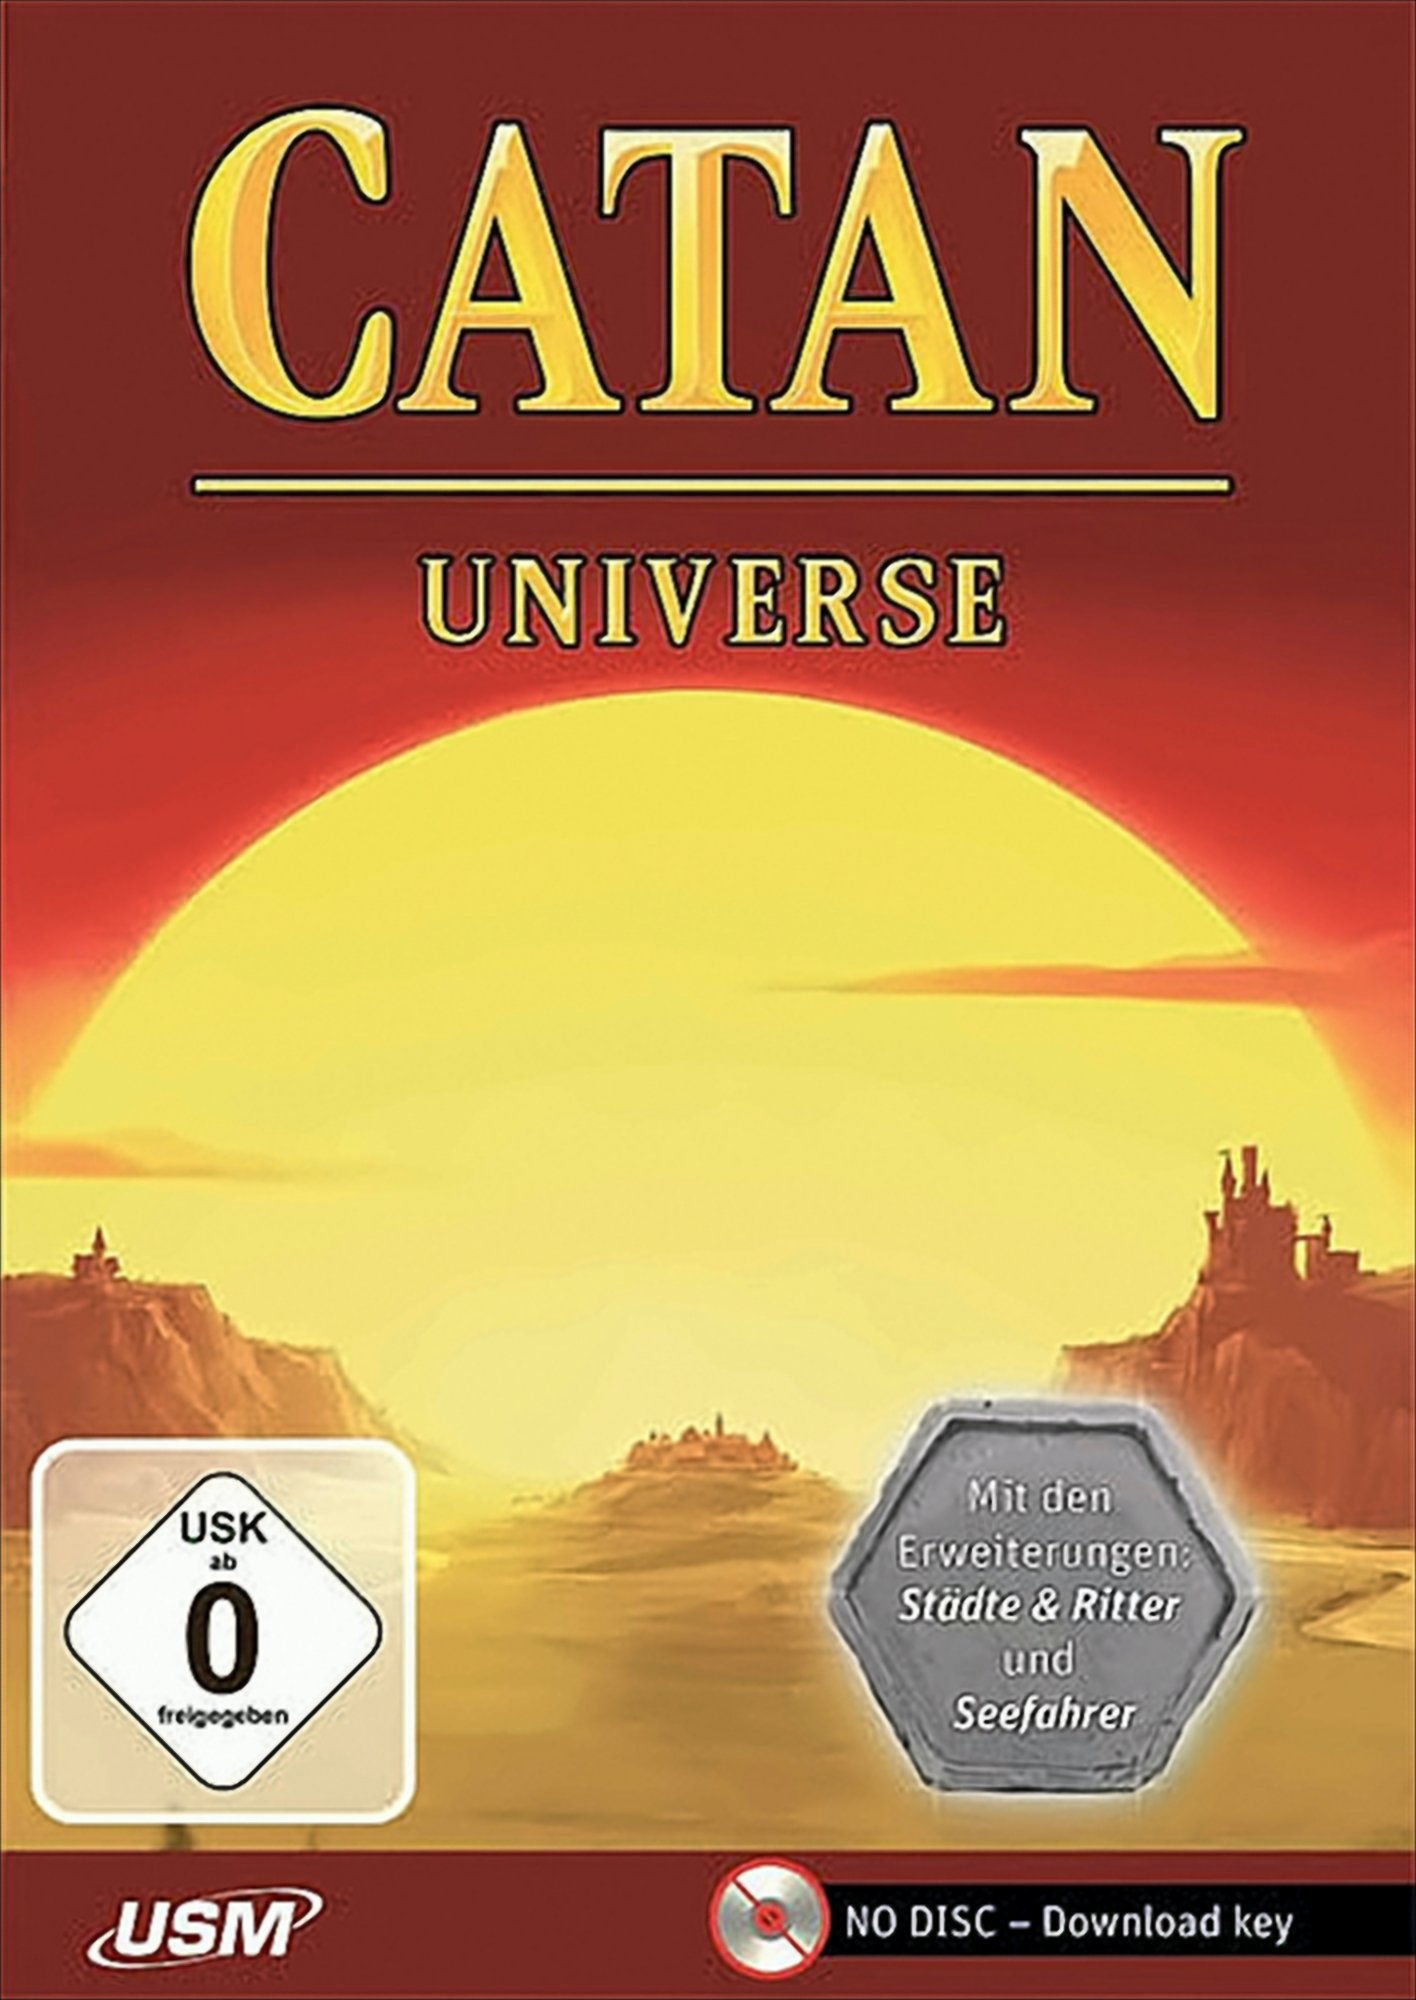 [PC] PC - Universe Catan Box